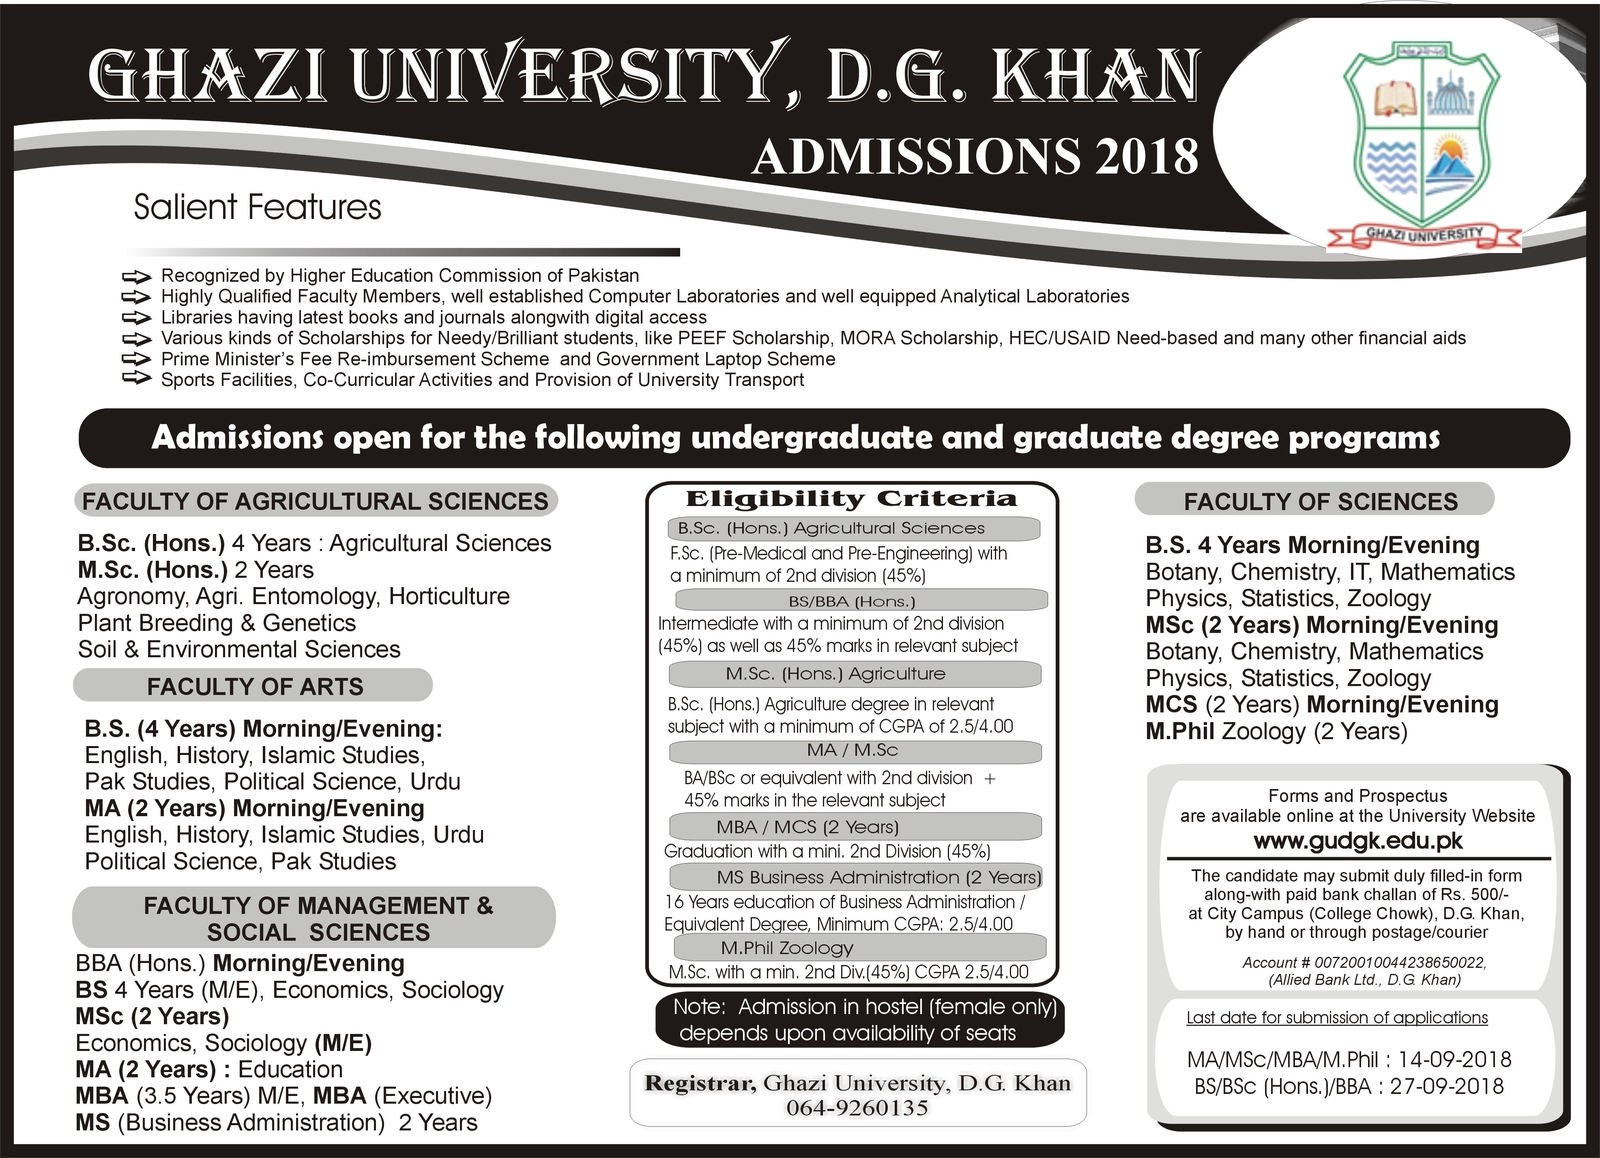 Ghazi University DJ Khan Admission 2018-2019